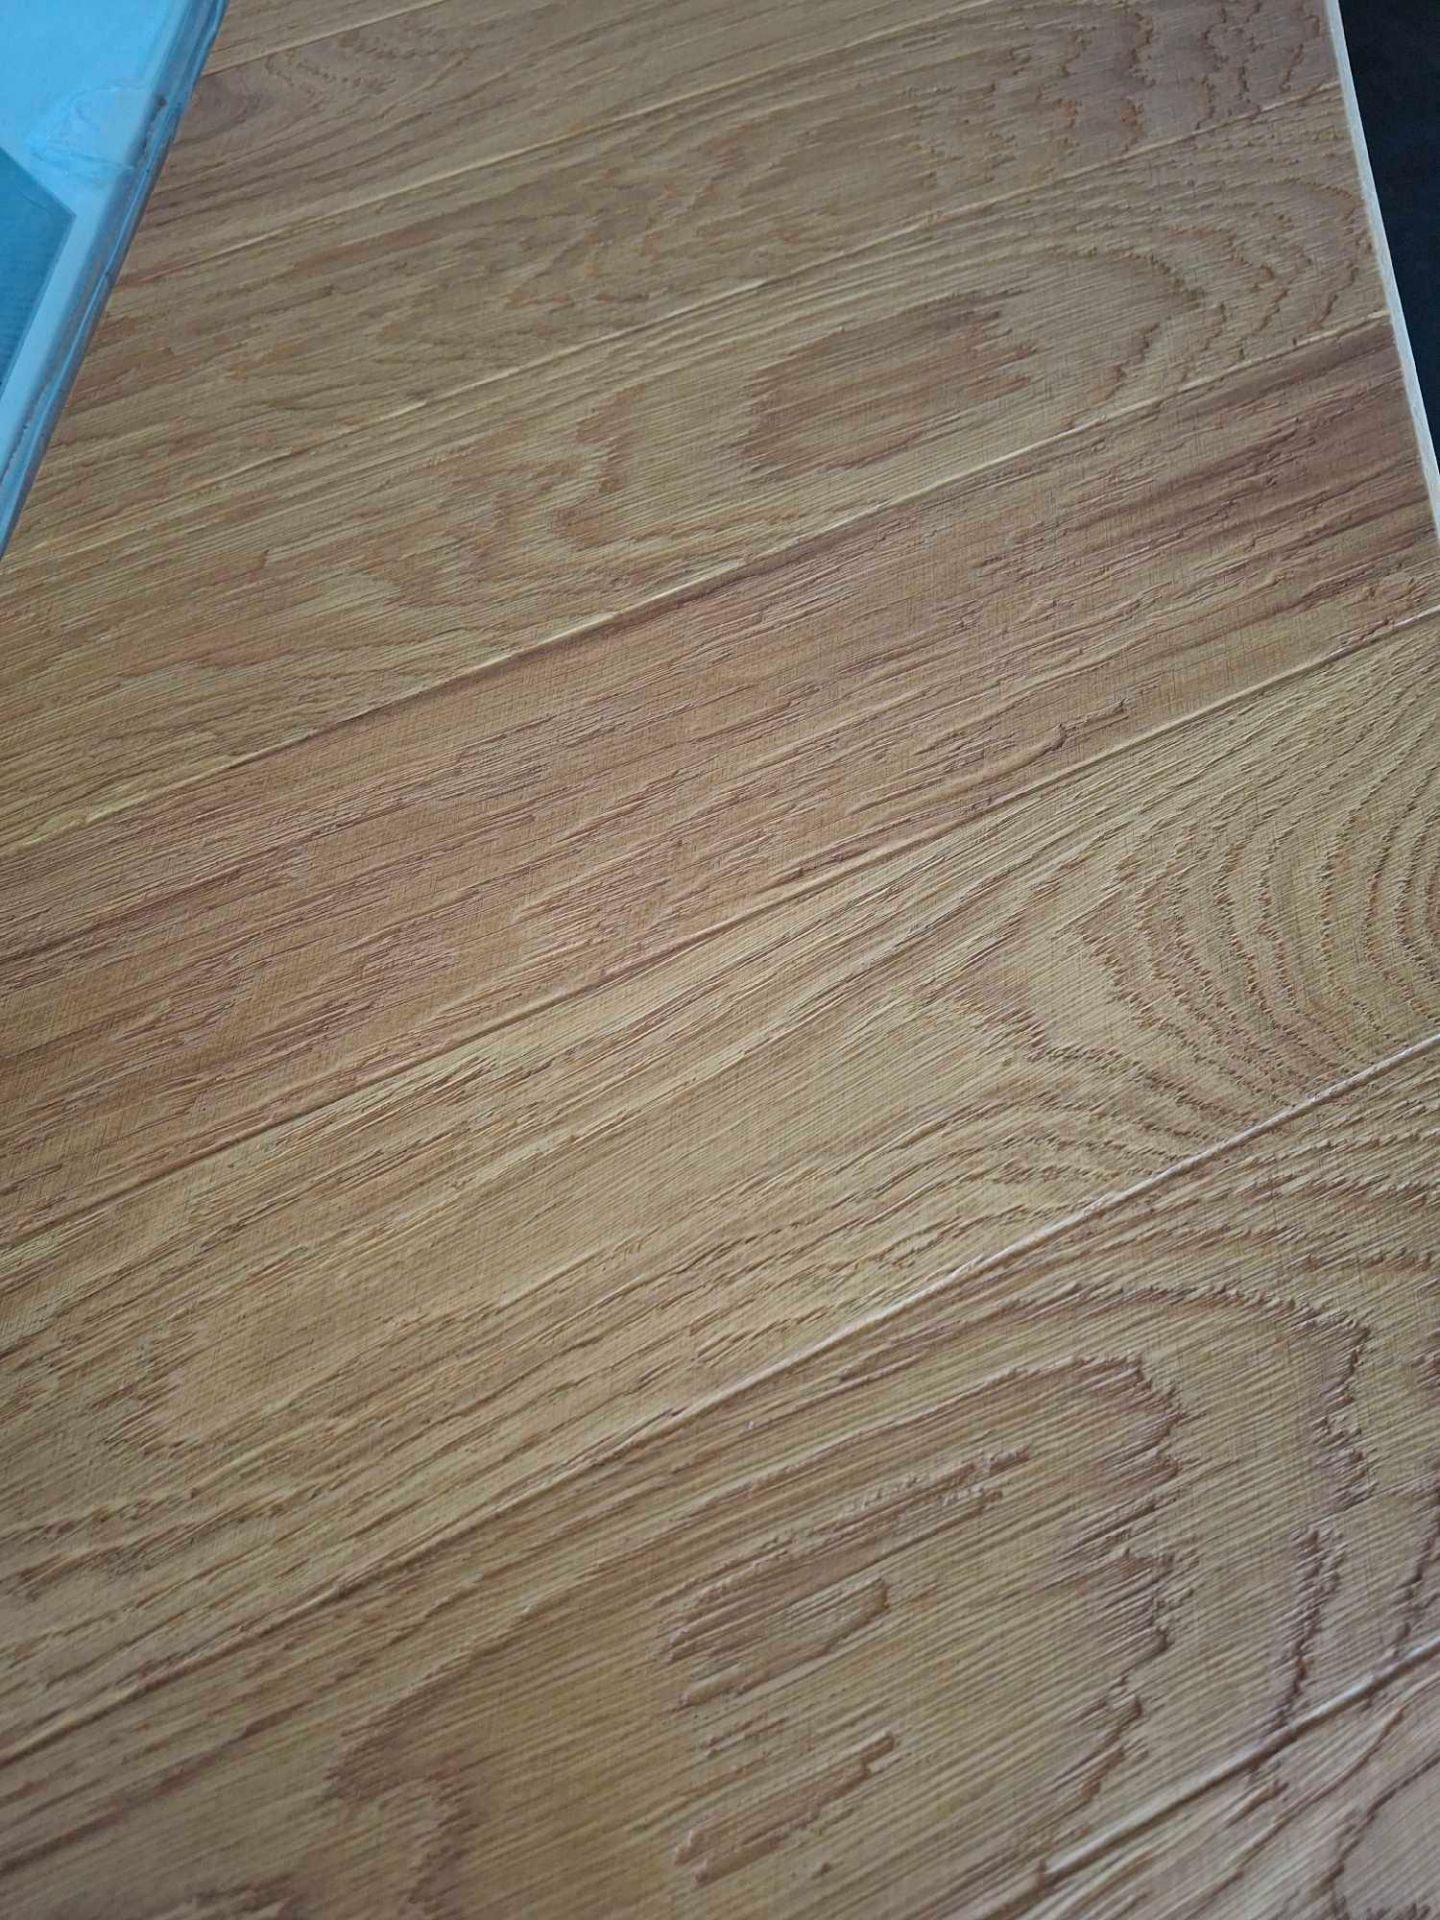 6 Packs of KÃ¤hrs Wood Flooring Chevron Light Brown Oiled 1848mm x 305mm x 15mm Per Plank 4 Per Pack